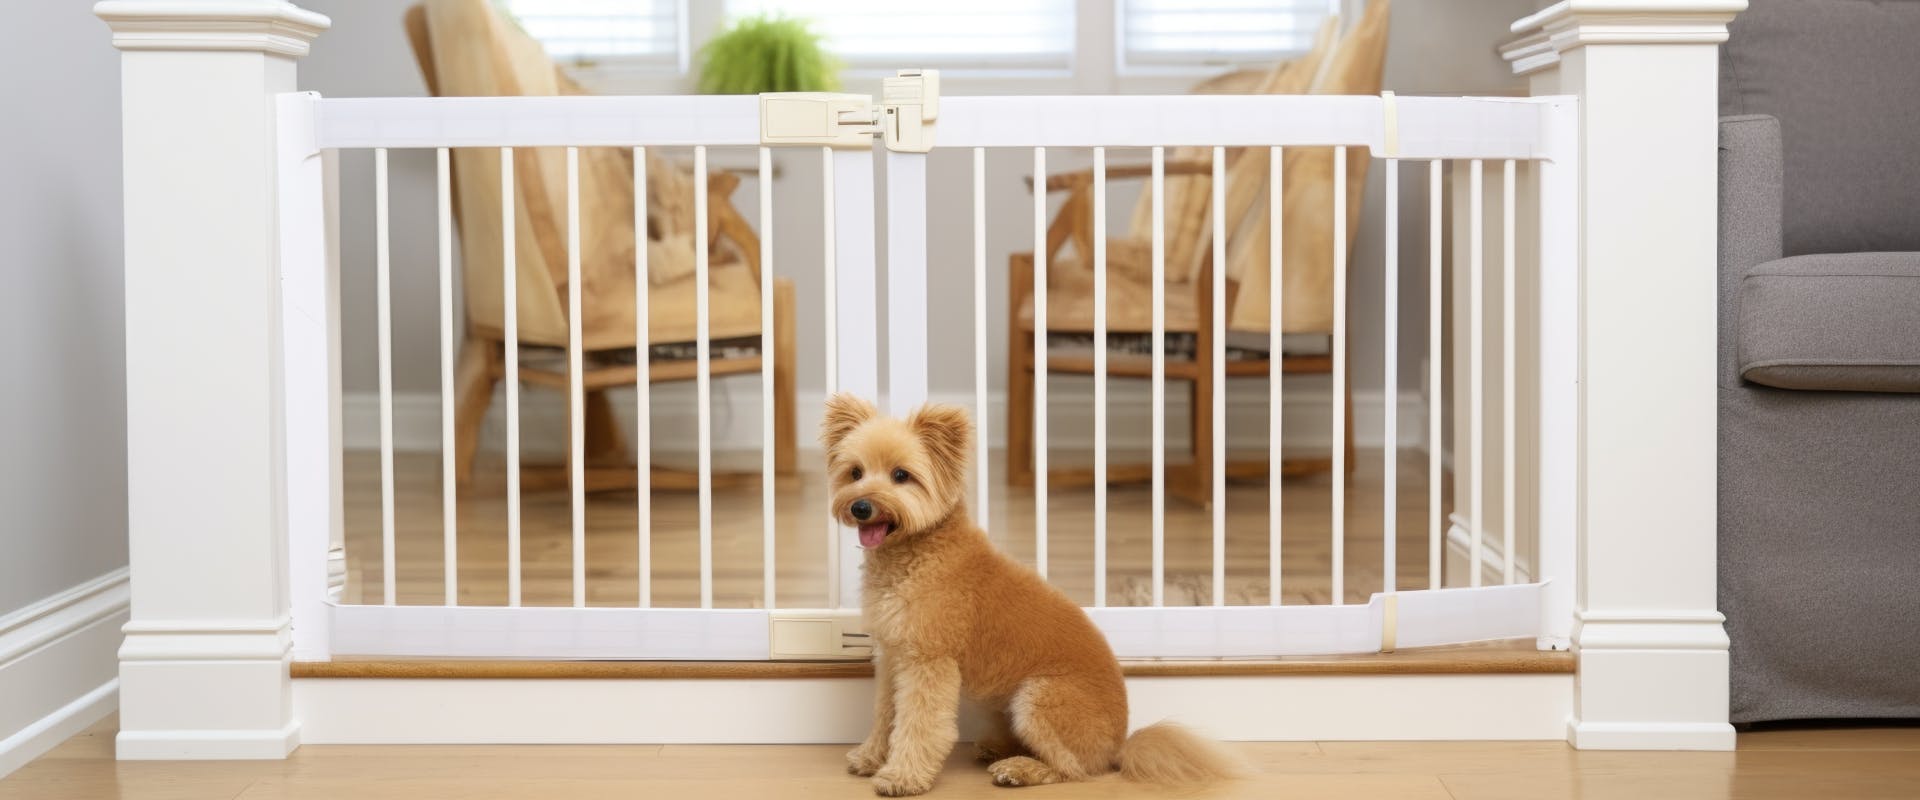 A dog sitting next to a pet gate.